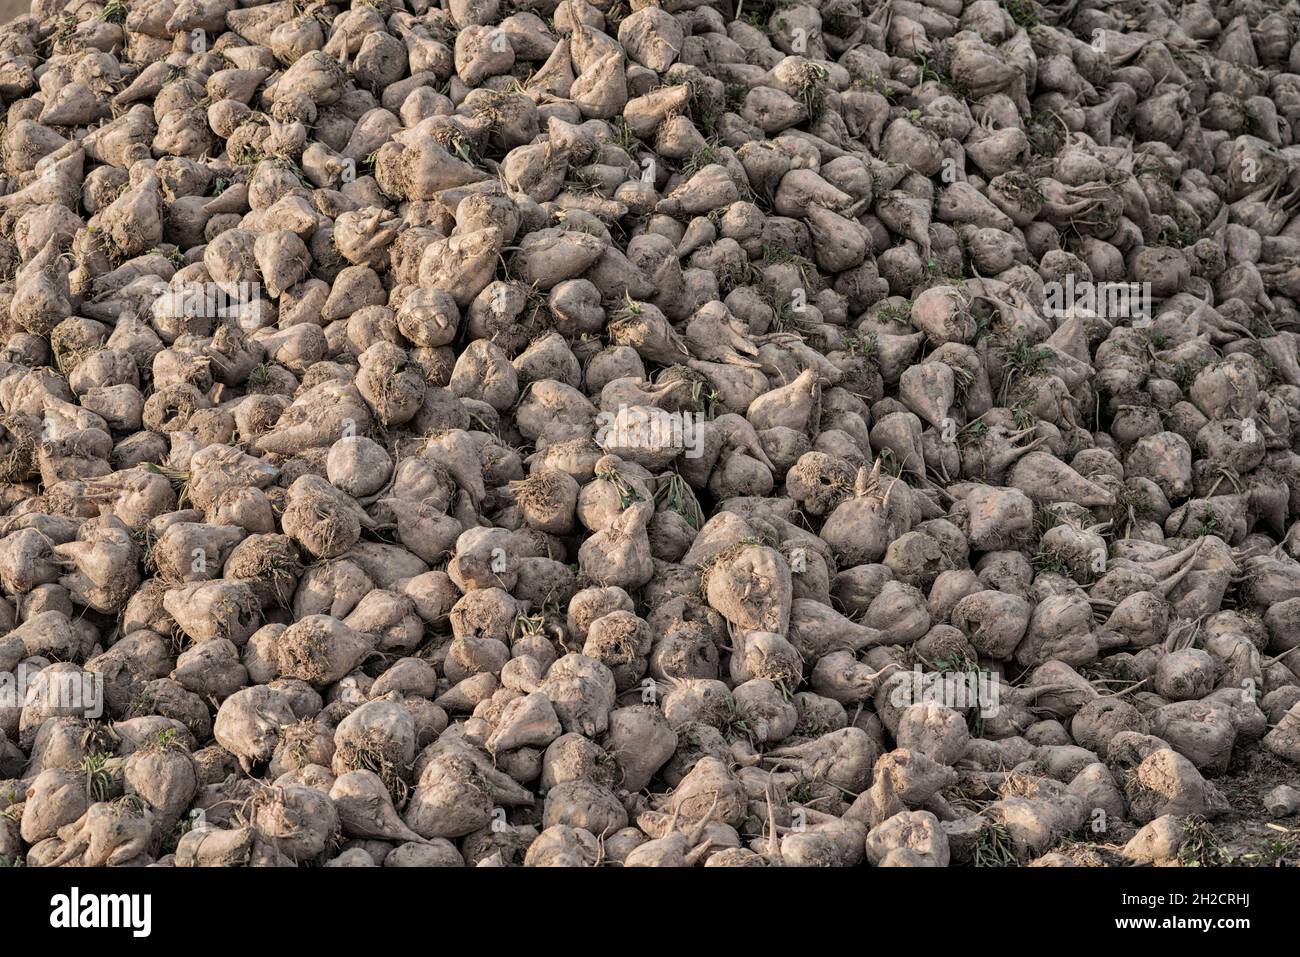 Pile of sugar beet harvested in a field, Wesertal, Gewissenruh, Weser Uplands, Weserbergland, Hesse, Germany Stock Photo